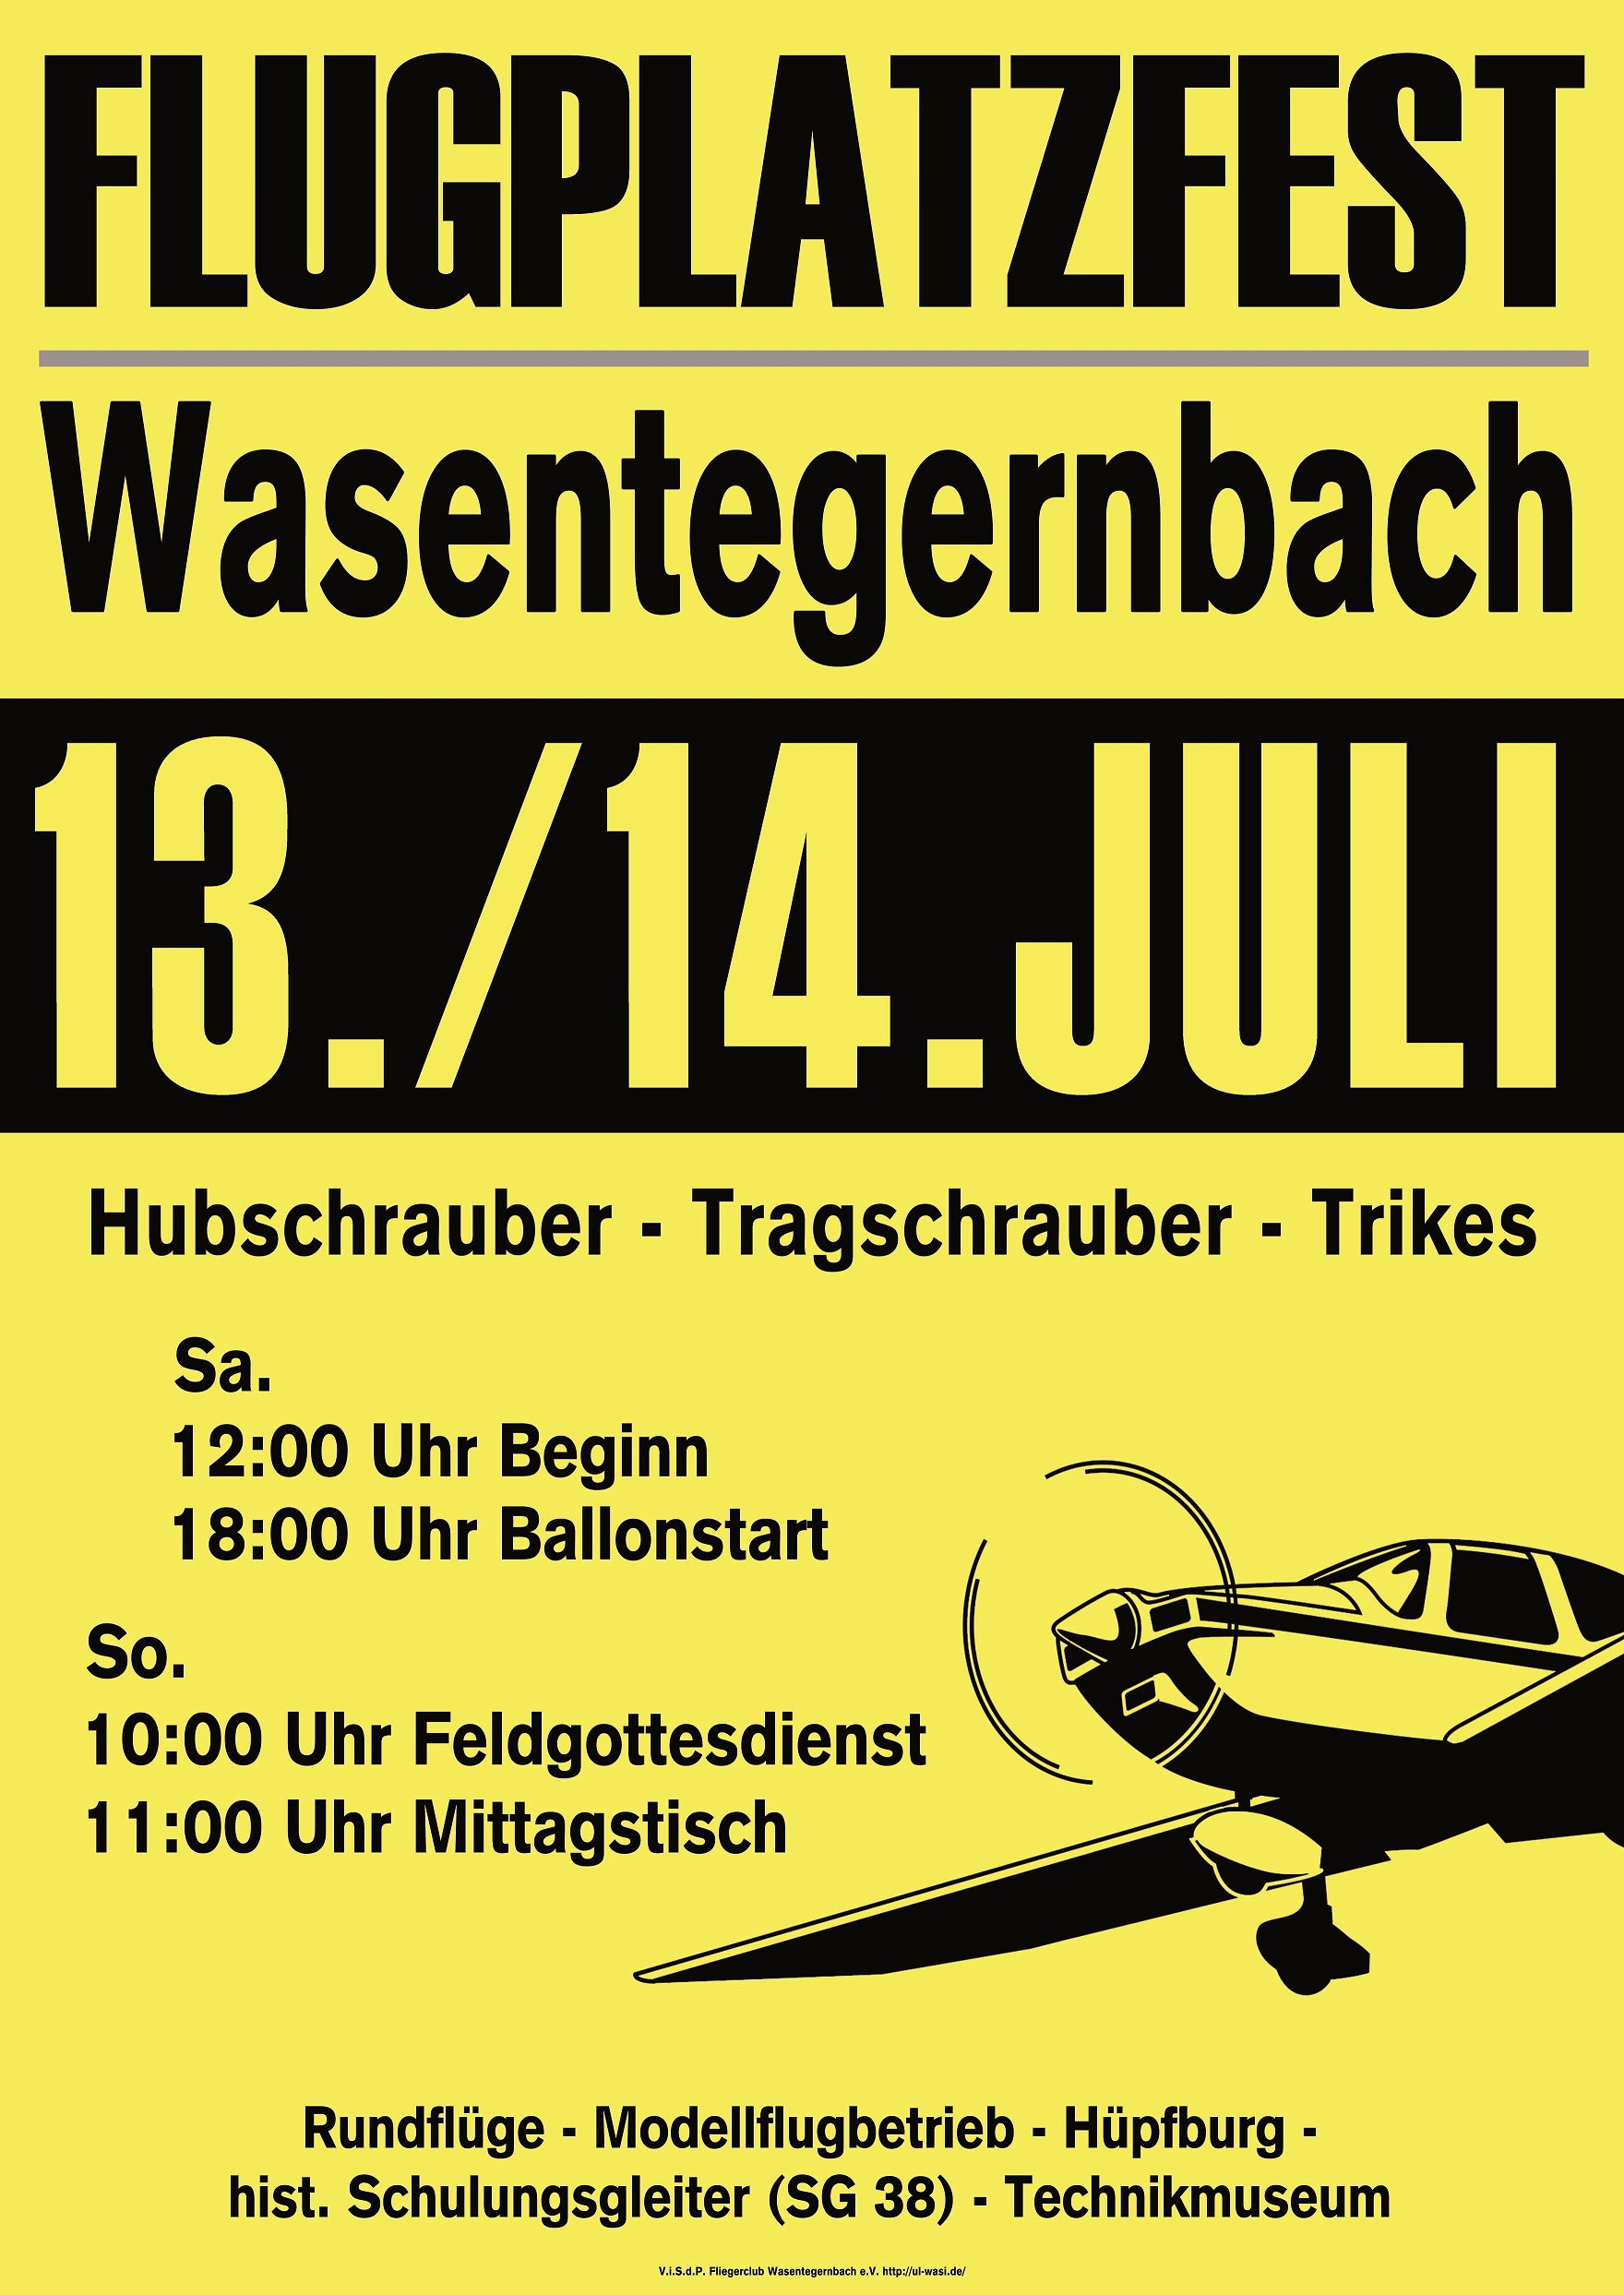 Flugplatzfest Wasentegernbach